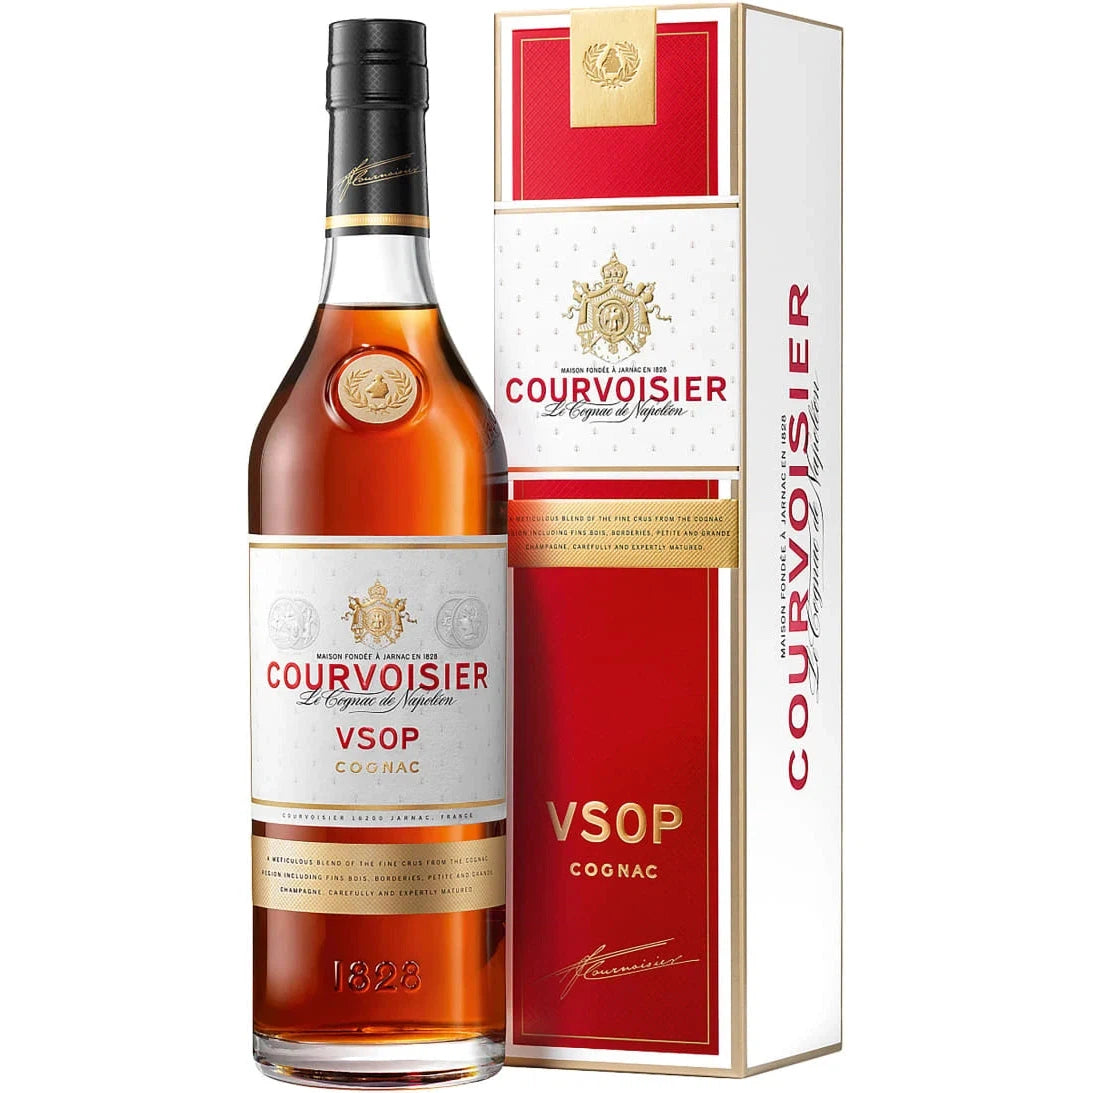 Giftbox | Vol. Winebuyers 40% 0,7L Courvoisier In Vsop